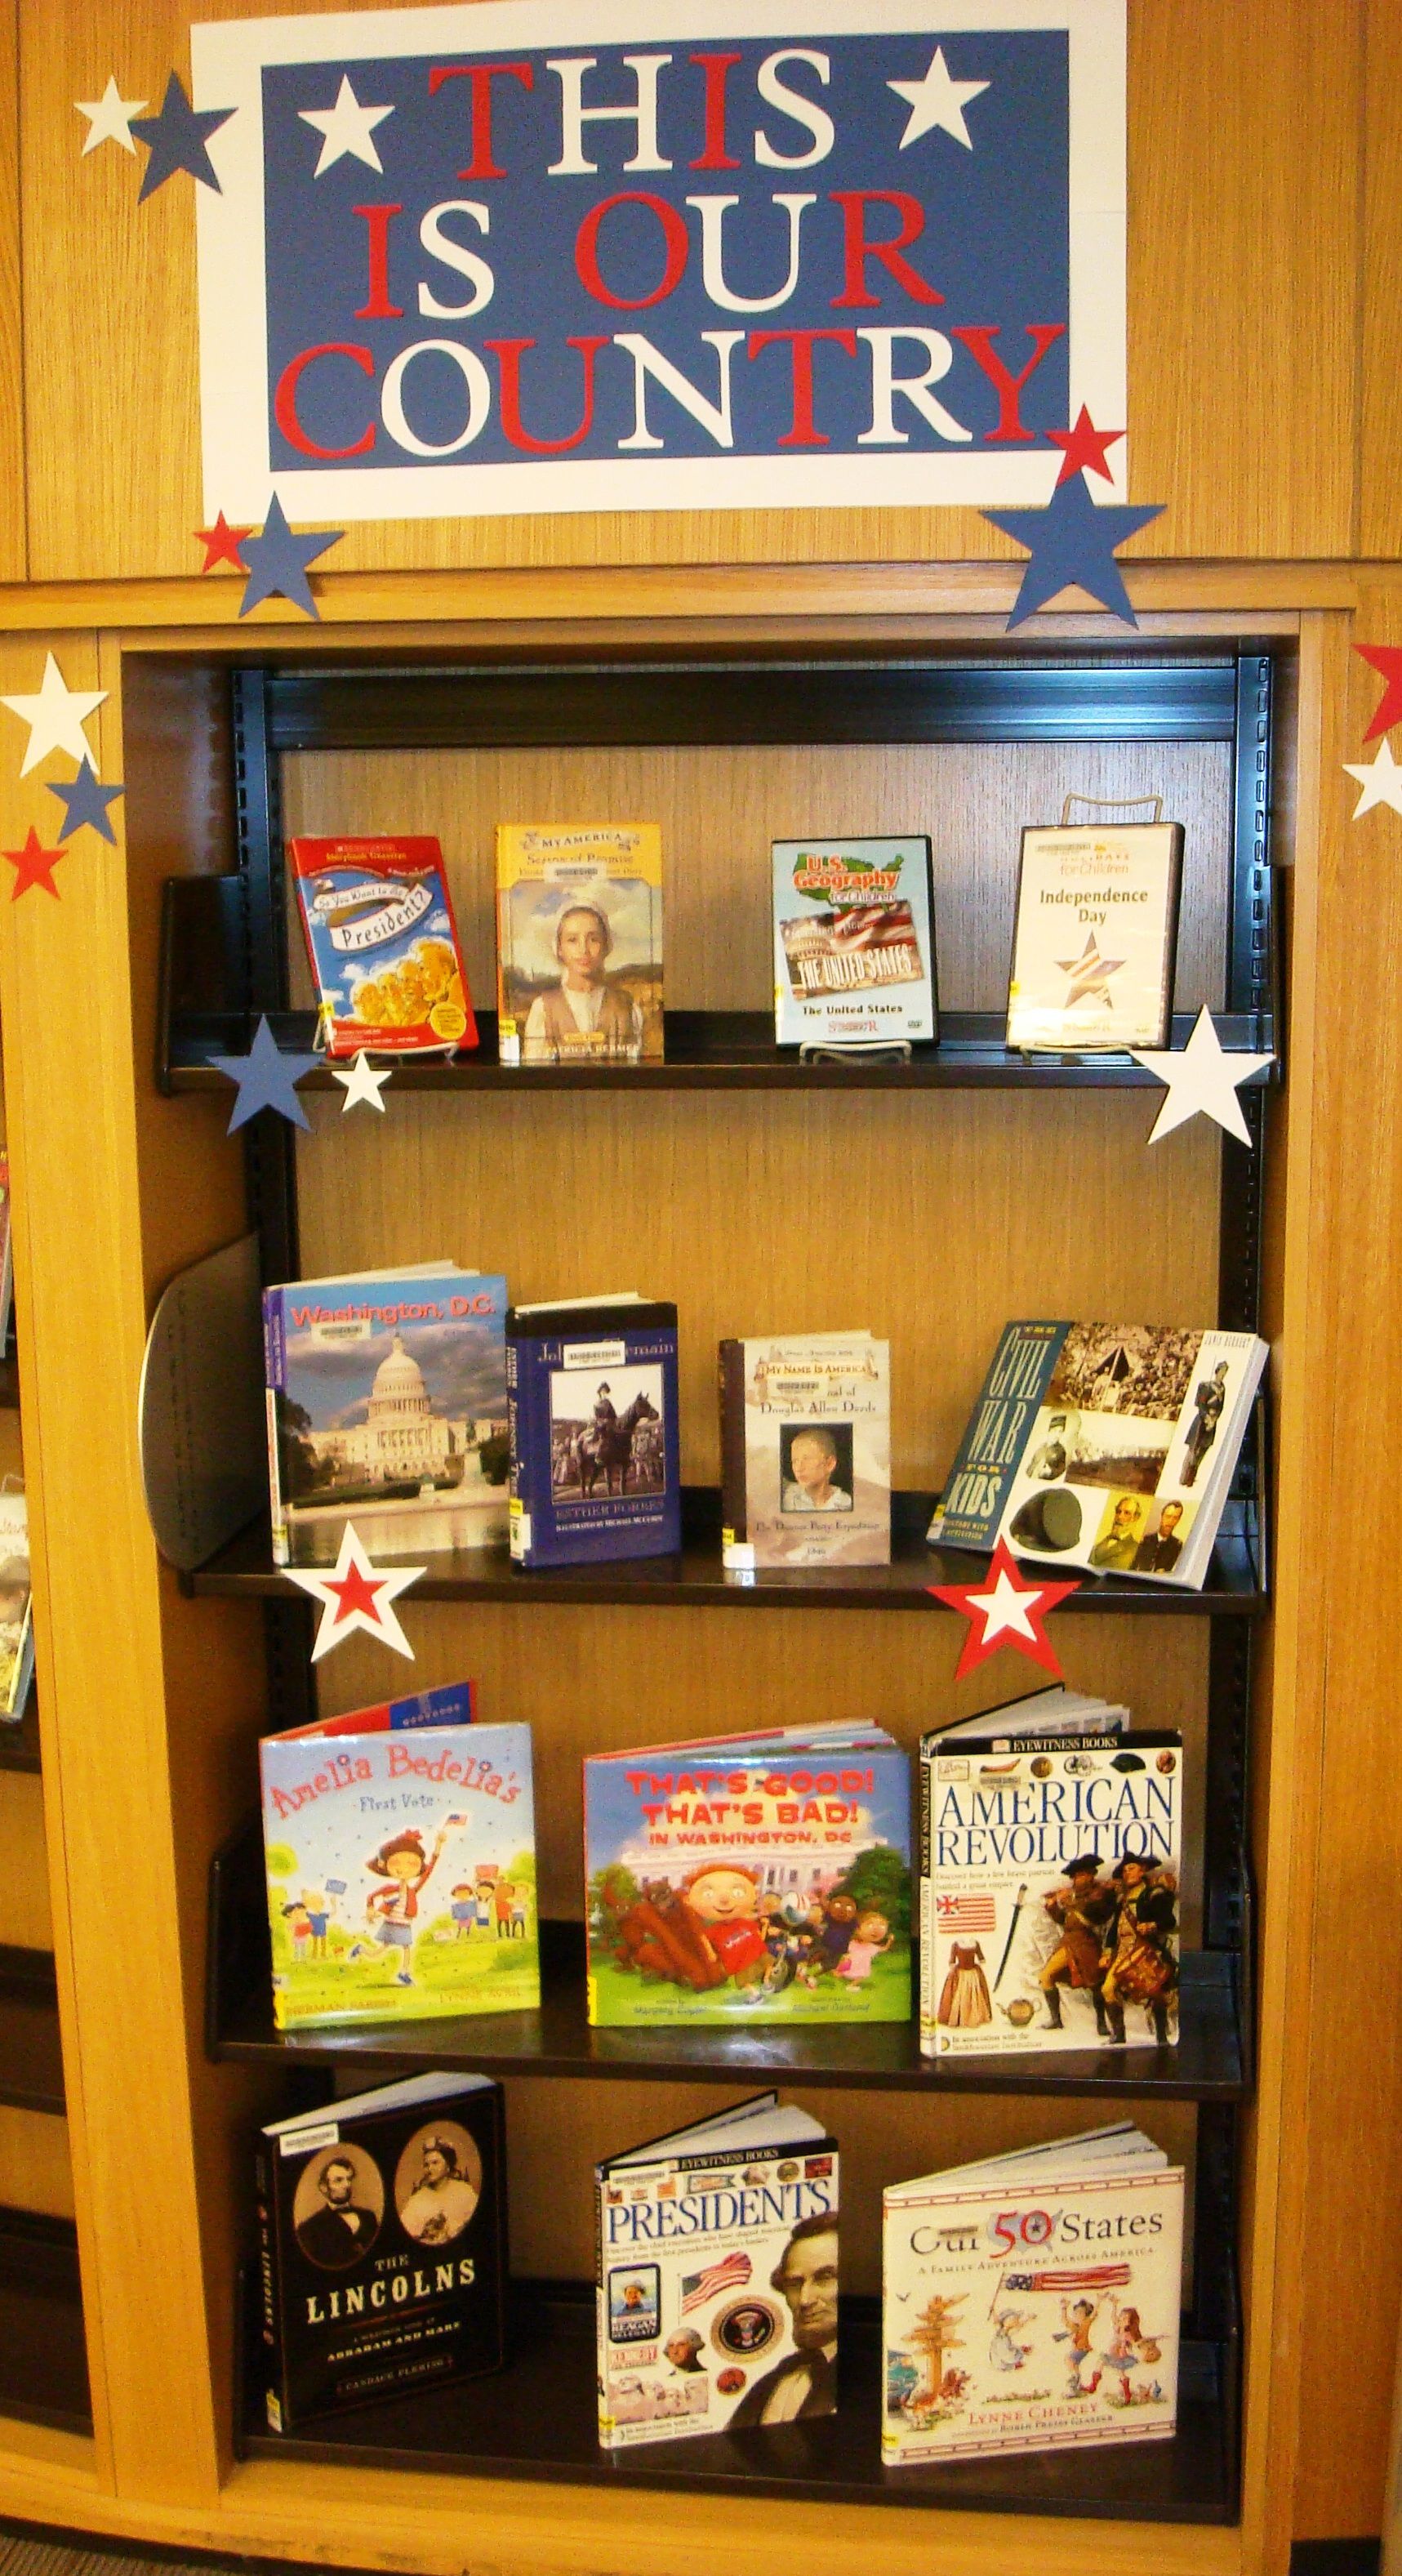 Historic children's books | Displays | Pinterest | Library displays ...